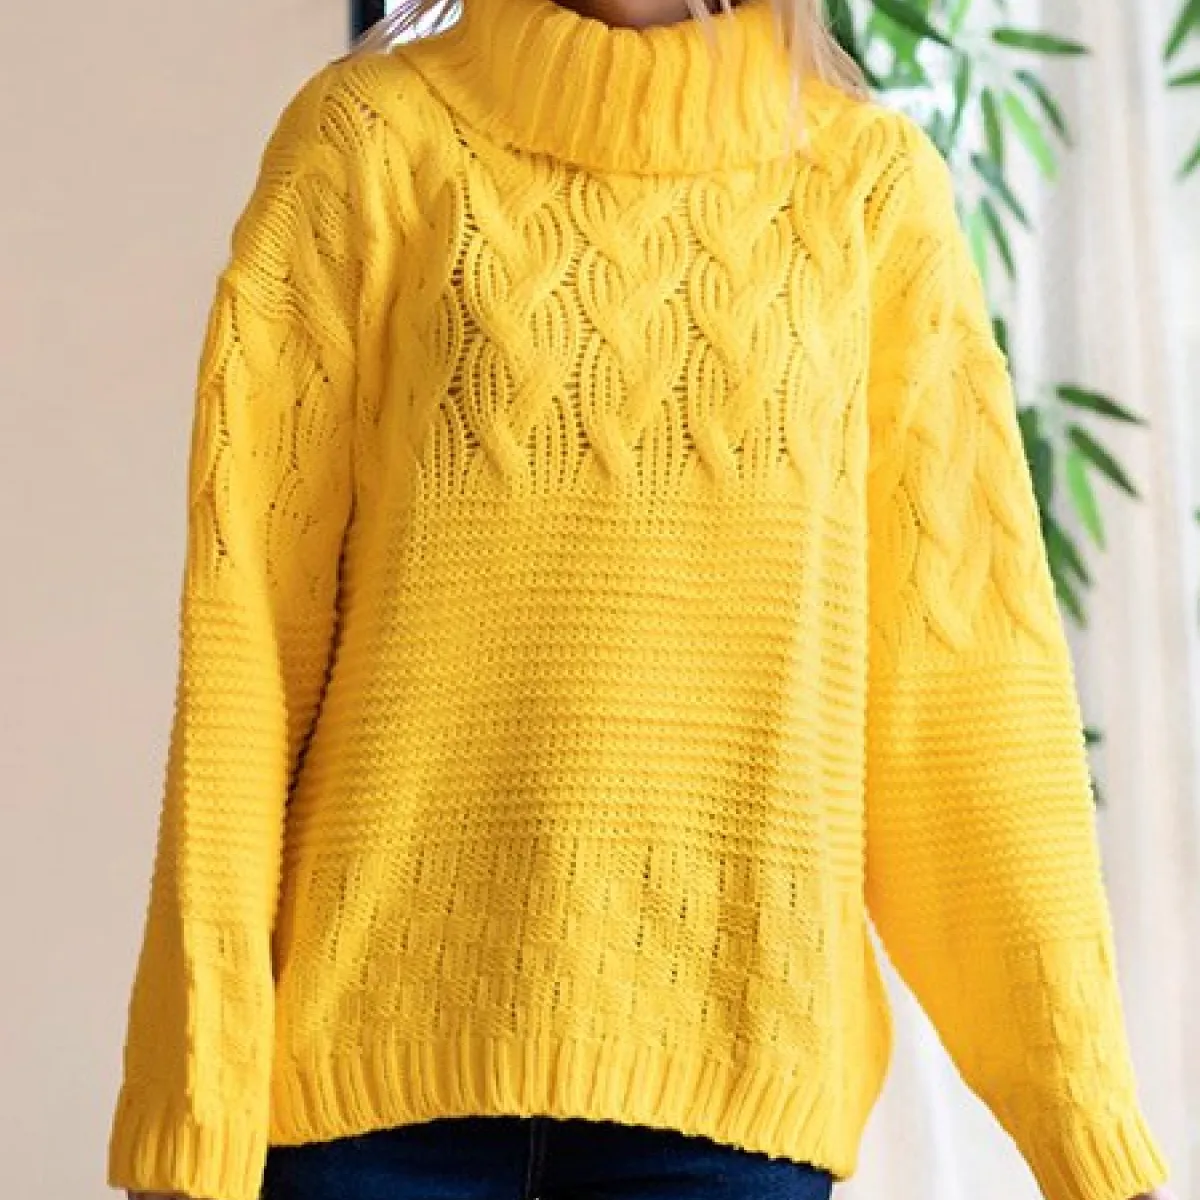 Turtleneck Knitwear Sweater Yellow Color 2023 New Season Women's Sweaters New Fashion Trend Winter Casual Long Sleeve